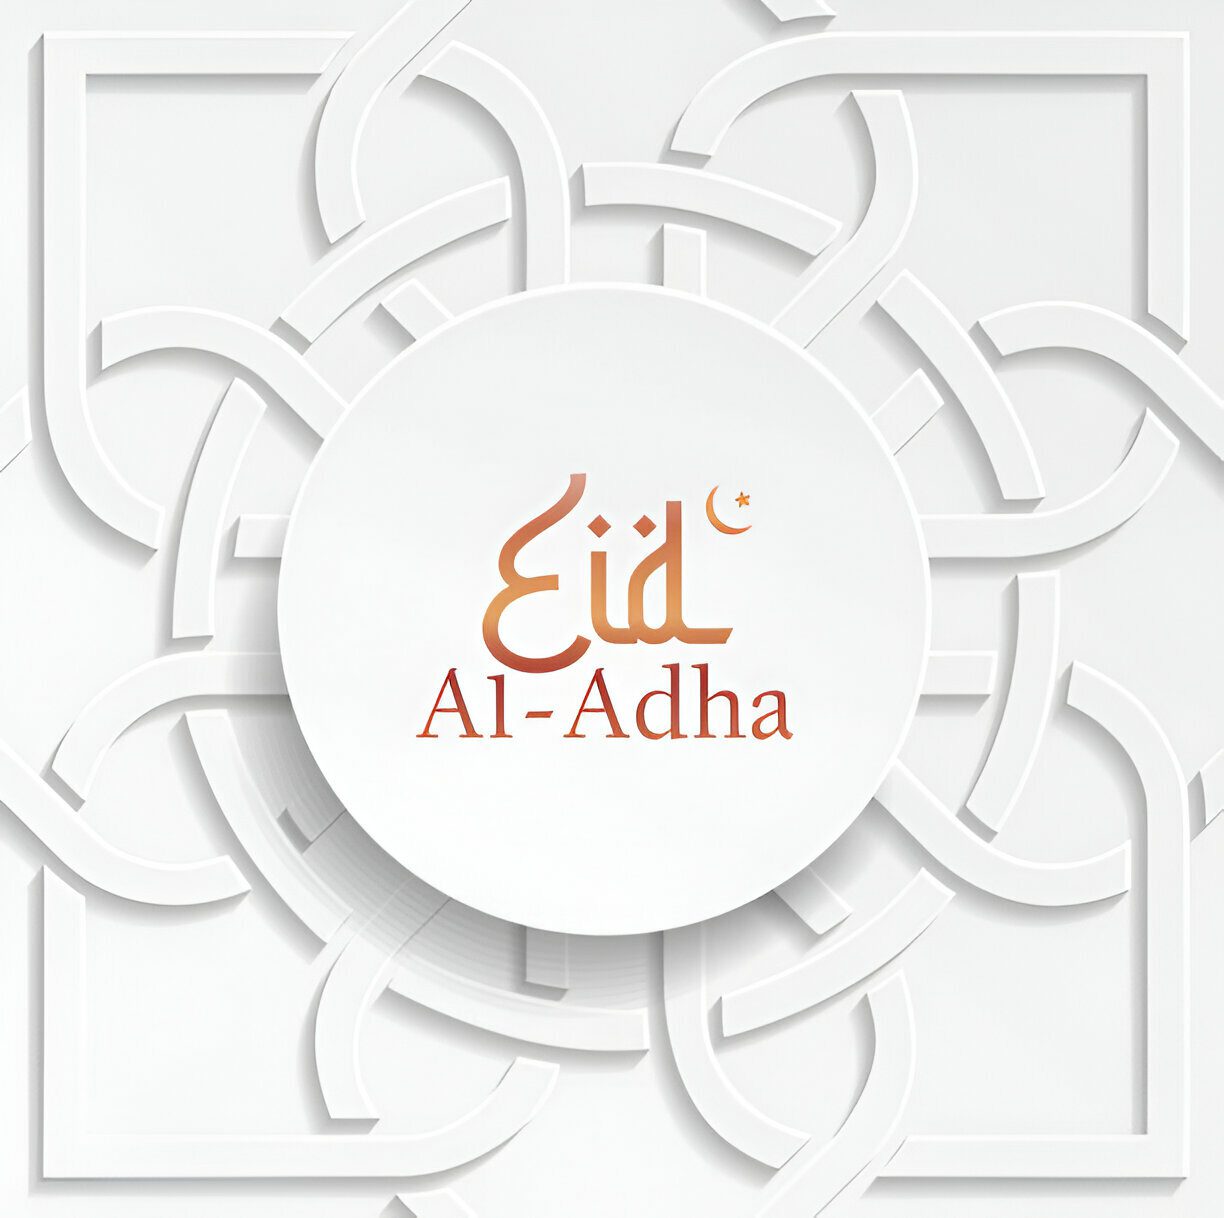 Recitation of the Takbir for Eid